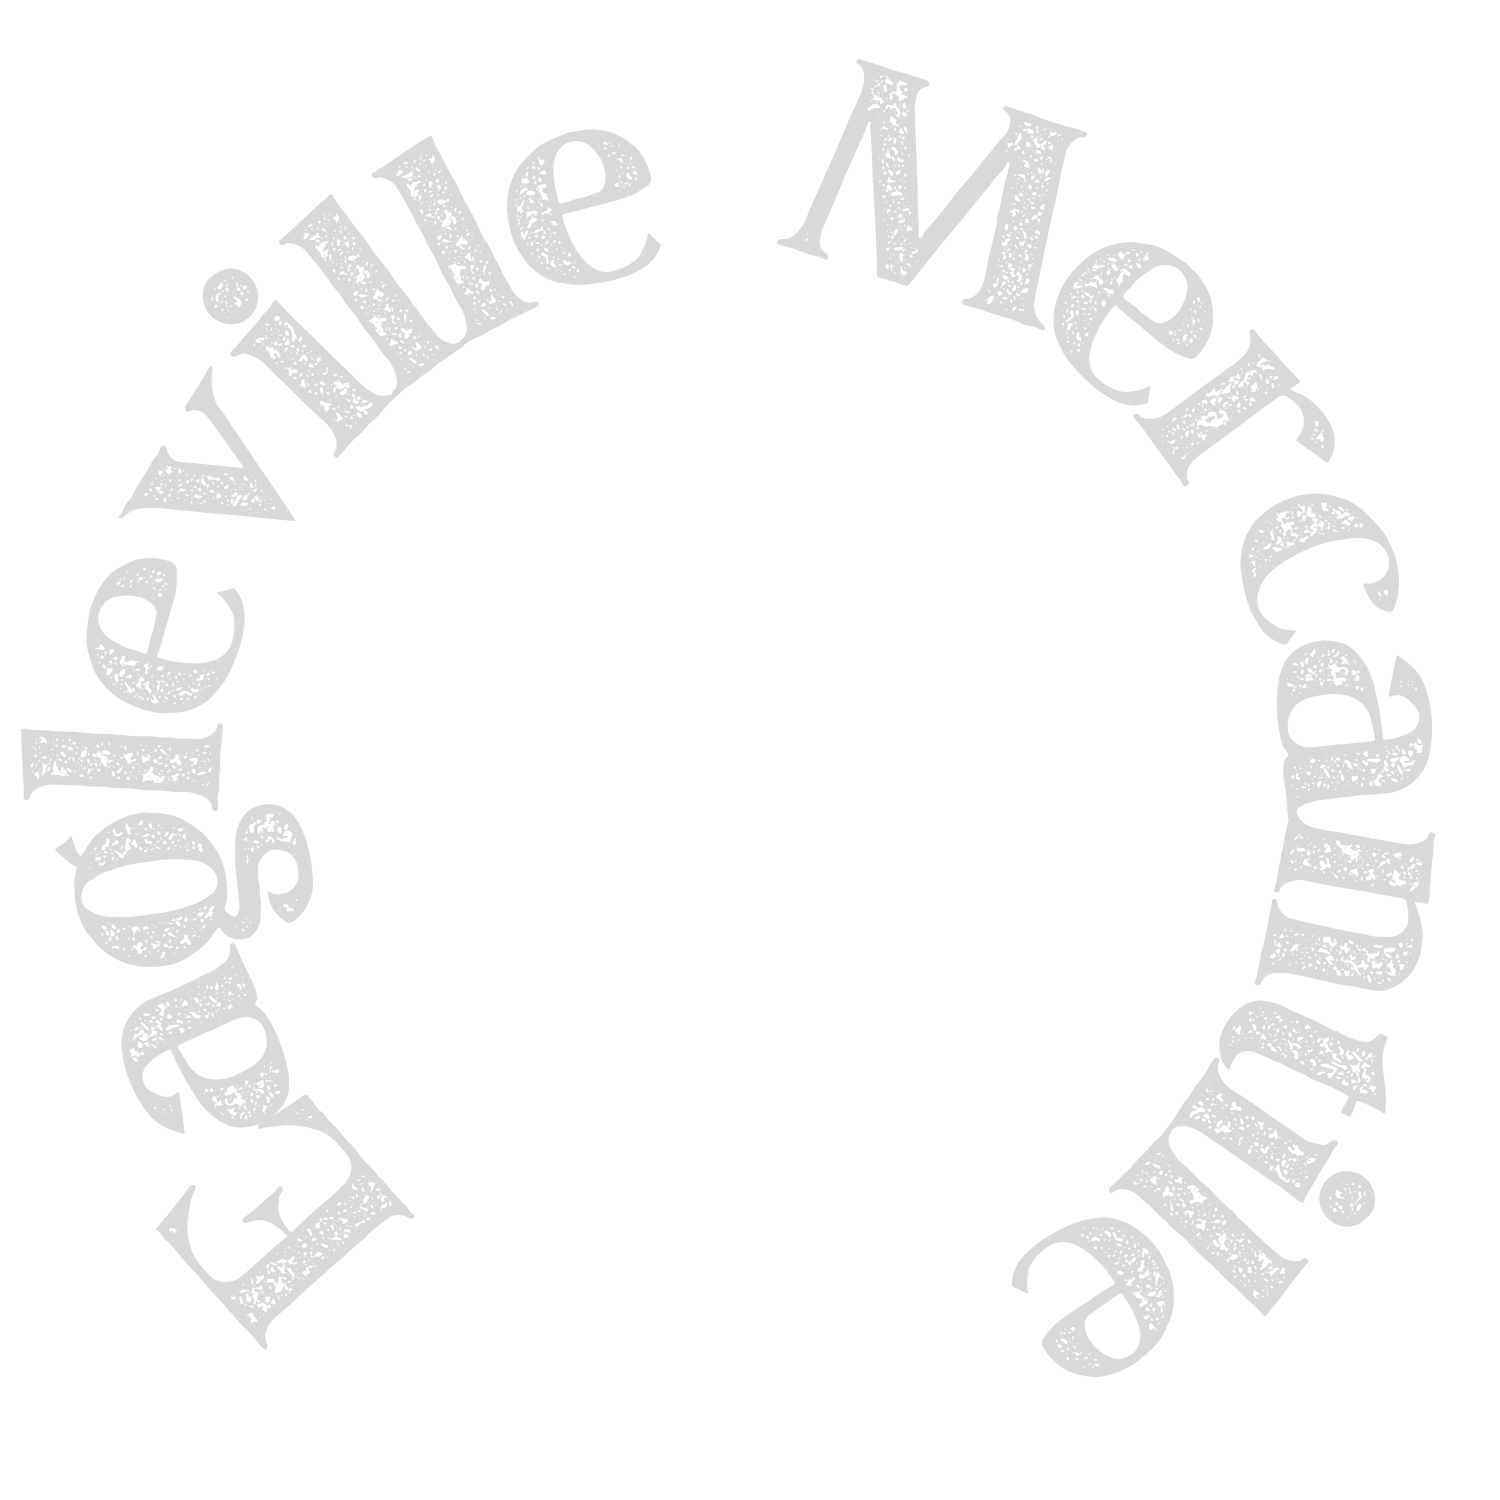 eaglevillemercantile logo